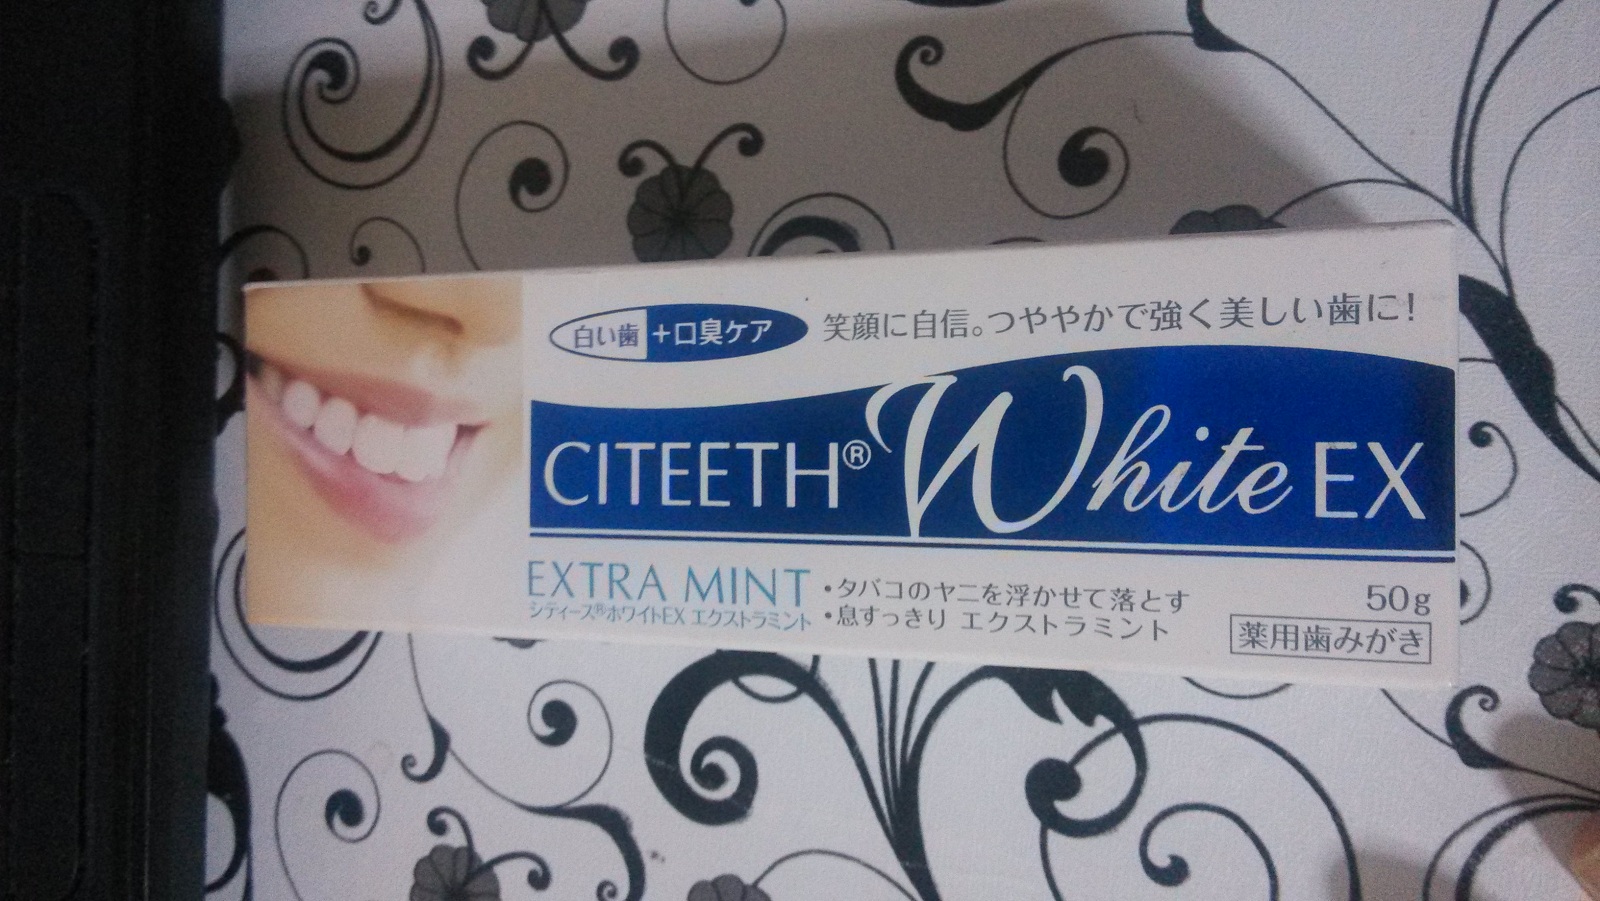 Citeeth美白牙膏 white EX 防过敏 消口臭 50g 蓝色预防牙周炎